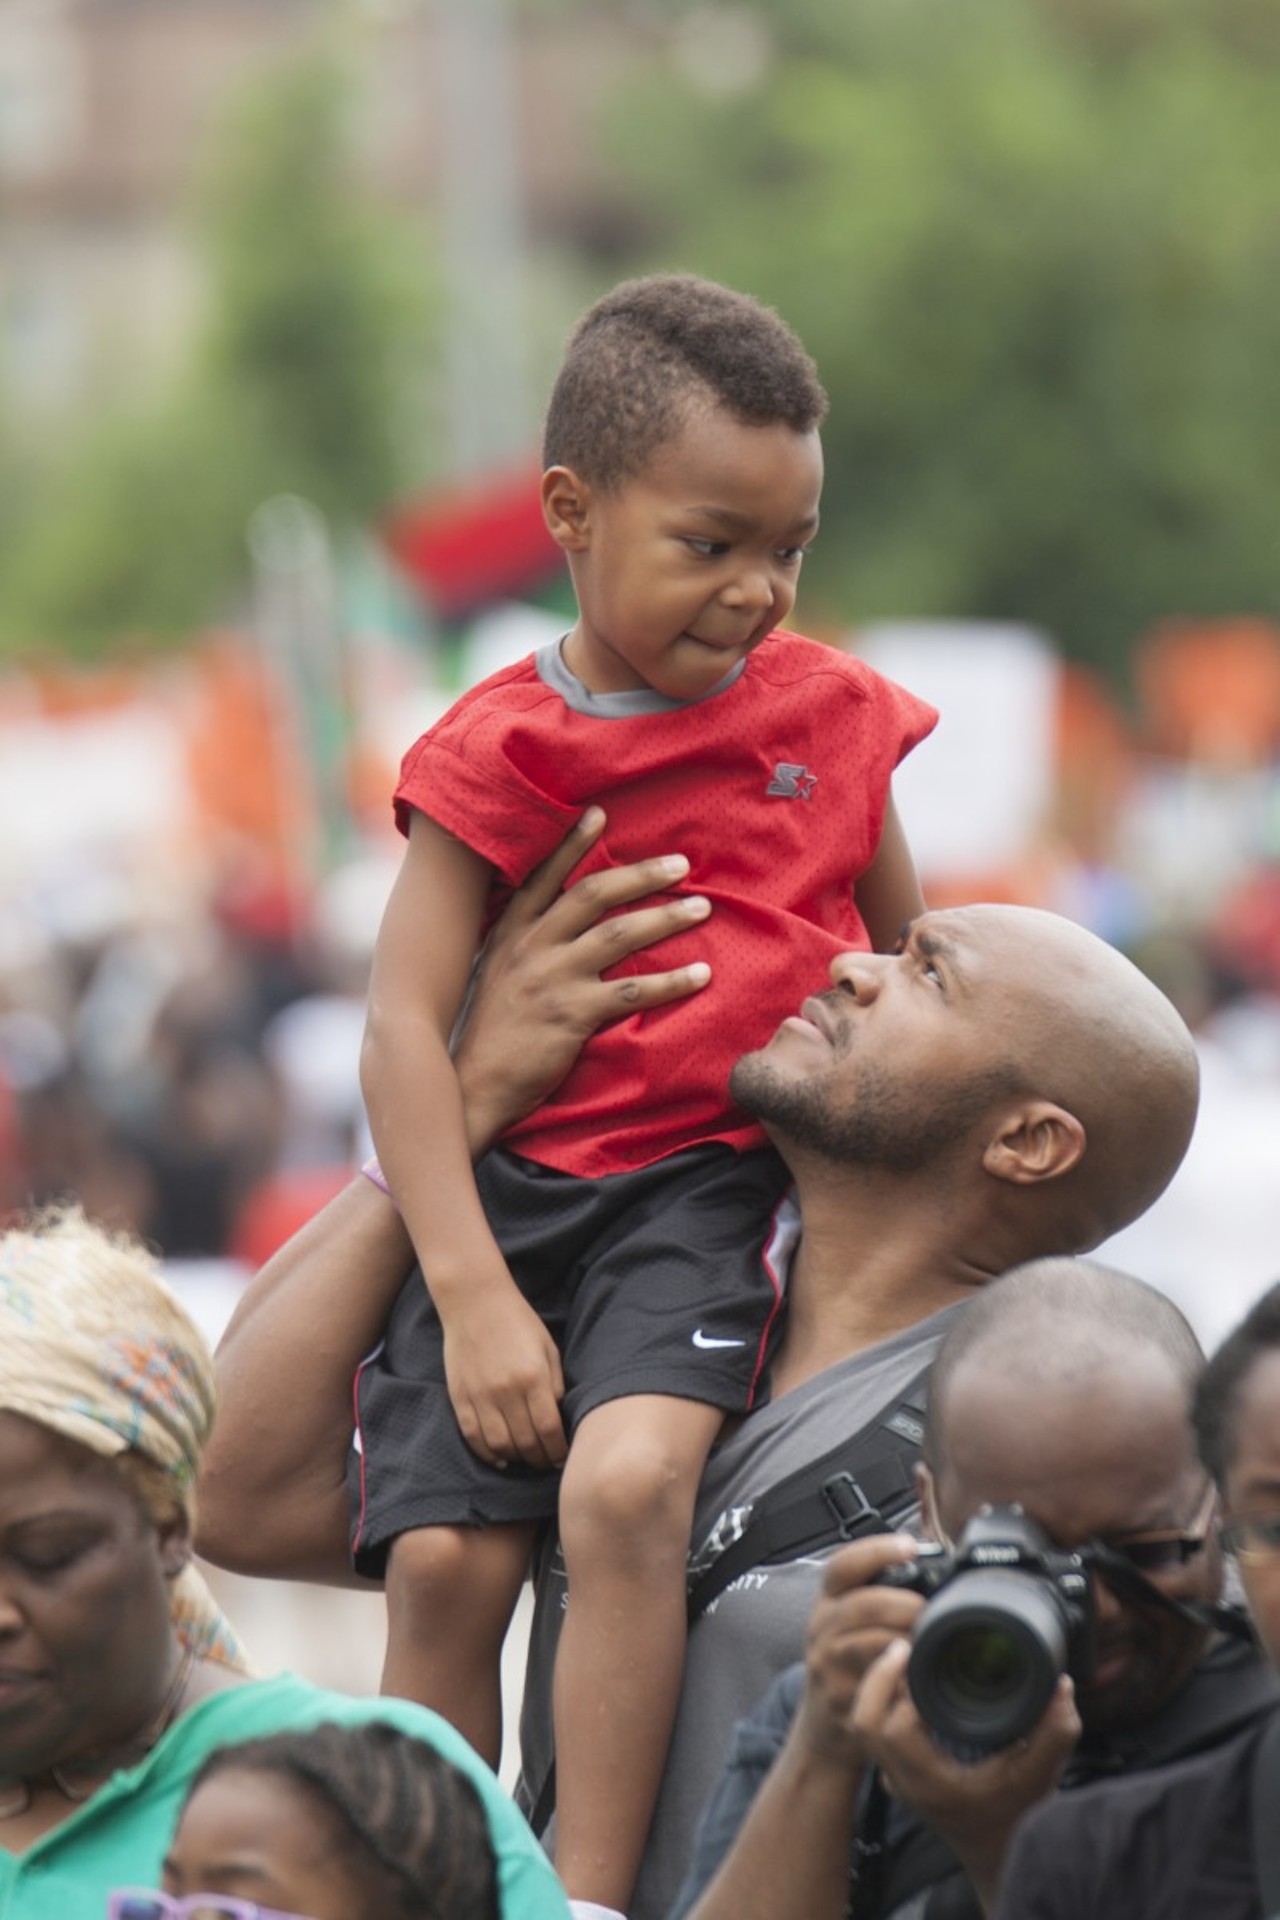 Photo by Rostant Darbouze, taken Aug. 30, 2014 in Ferguson.